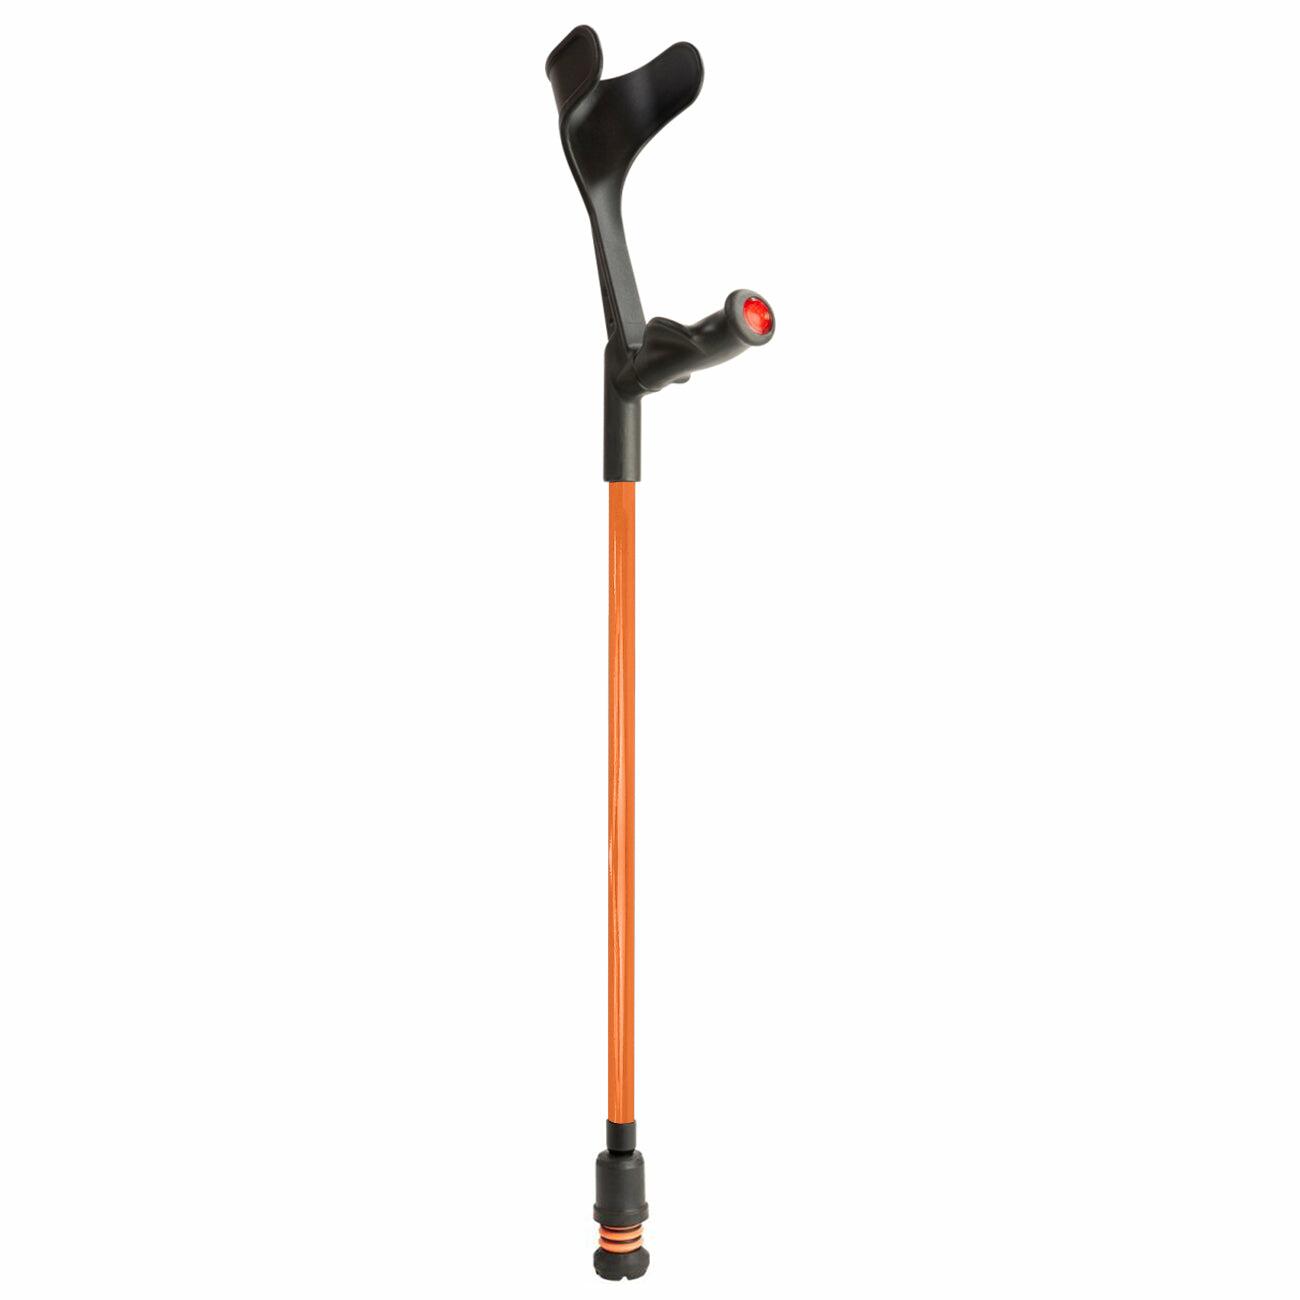 A single orange Flexyfoot Comfort Grip Open Cuff Crutch